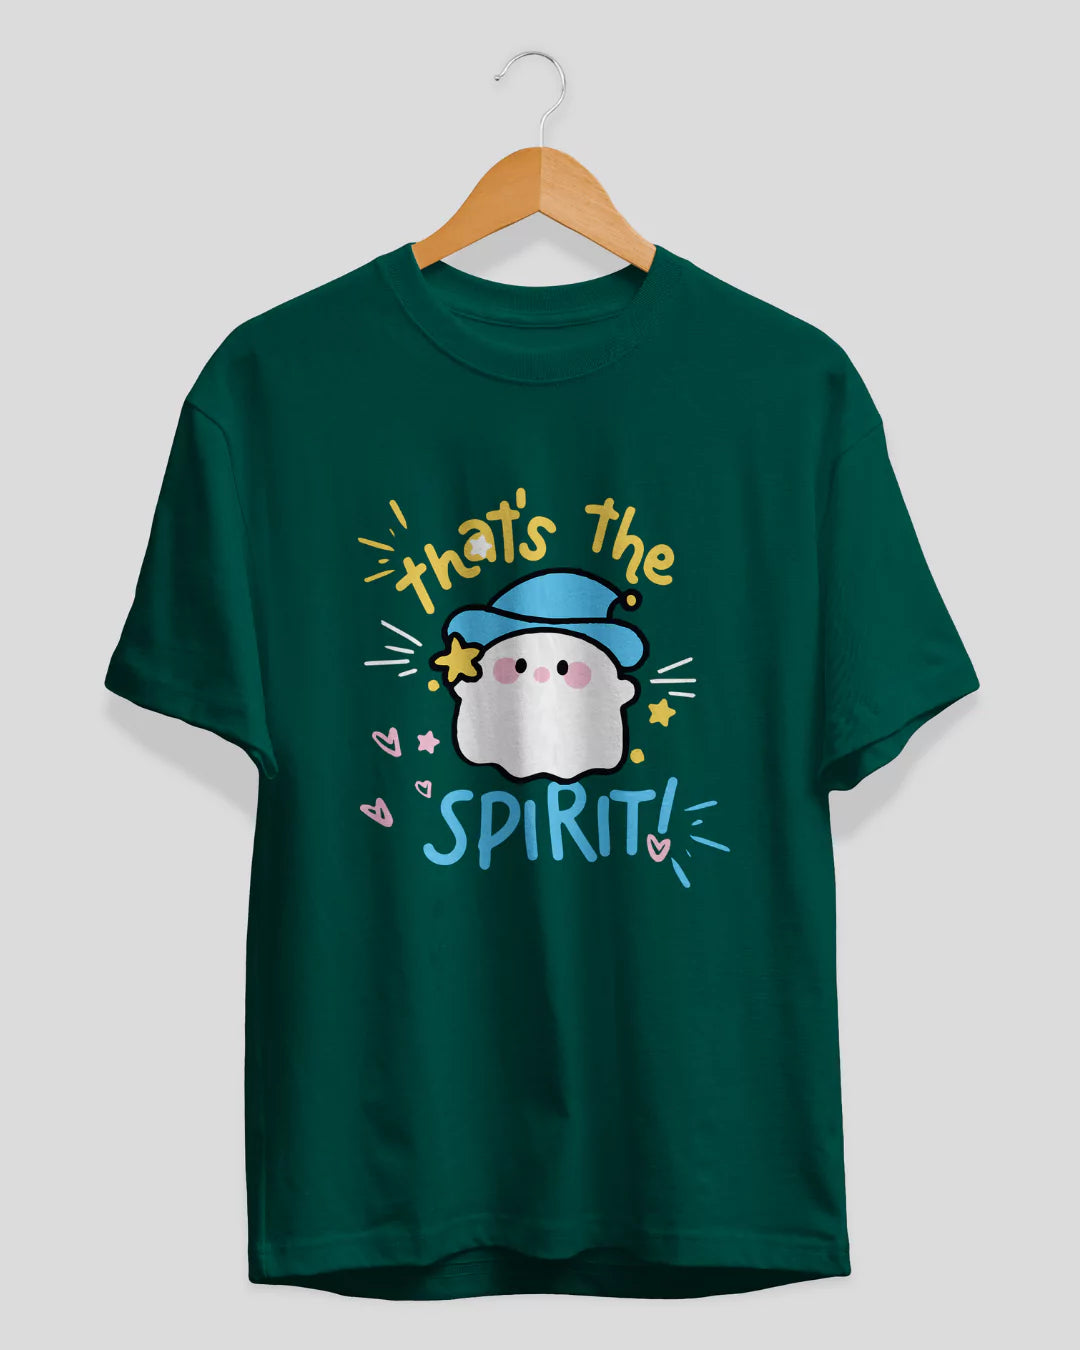 That's The Spirit T-Shirt